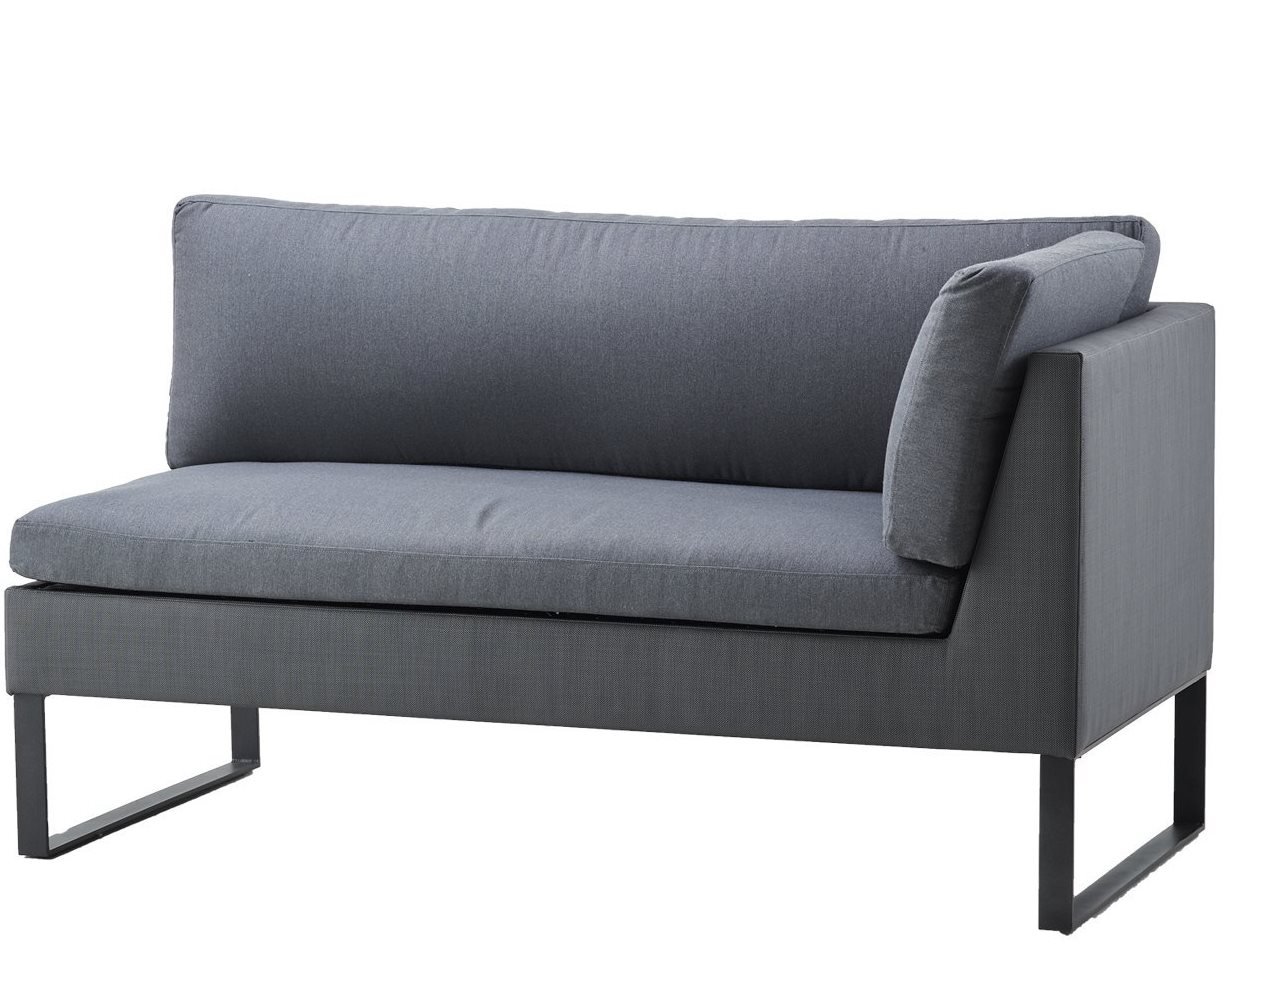 Flex 2 Seat Left Module Sofa modular from Cane-line, designed by Cane-line Design Team